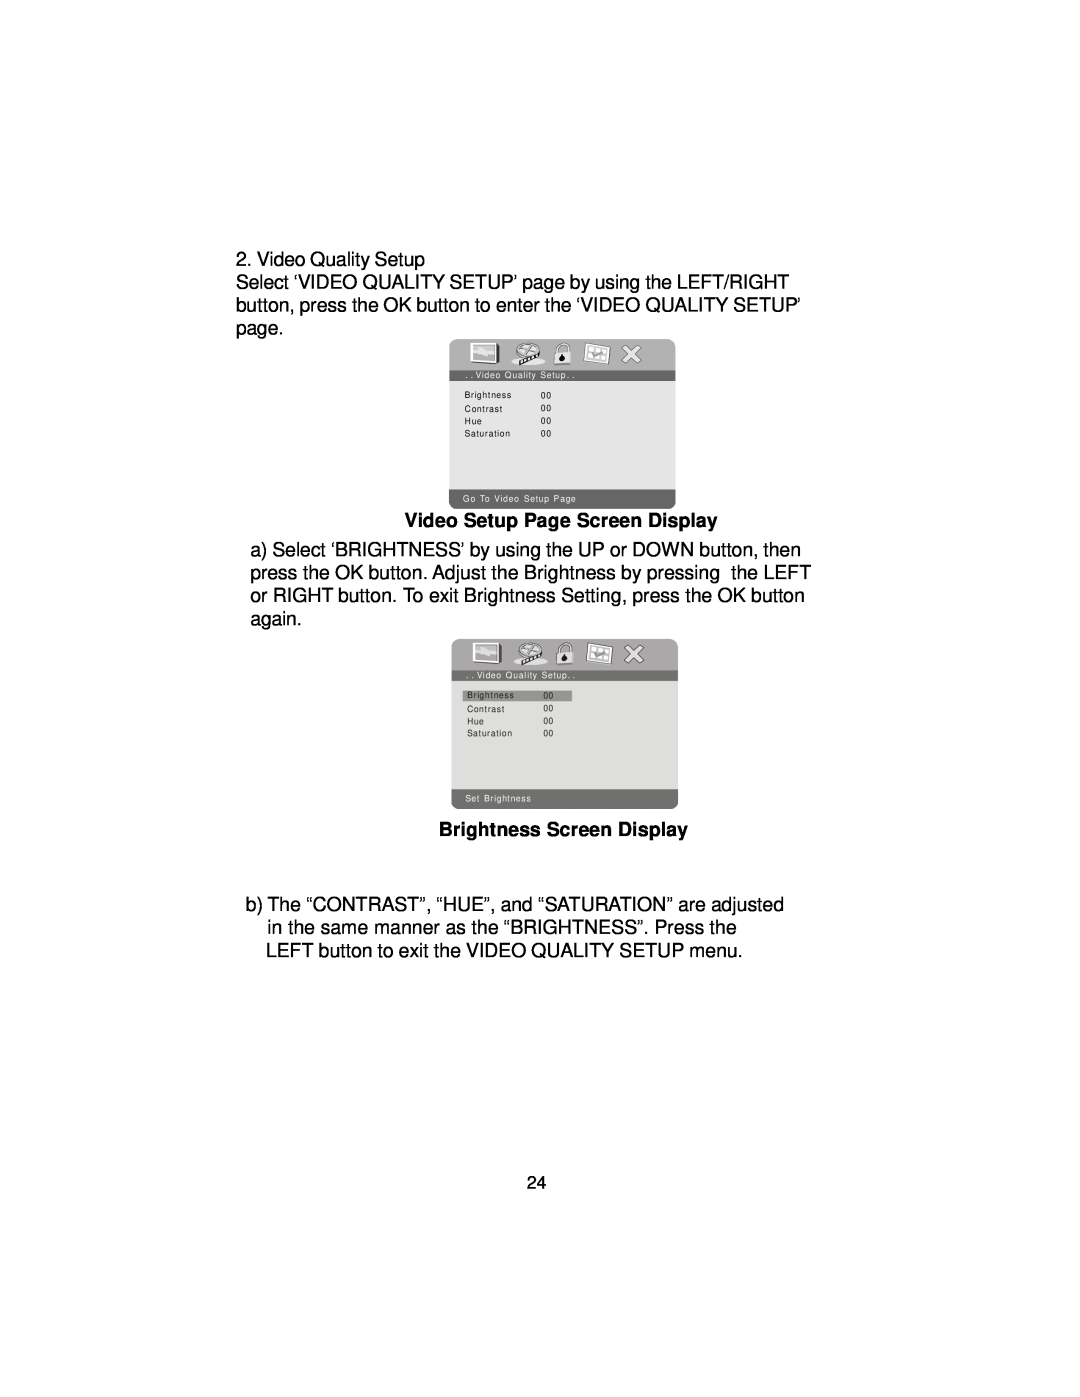 Audiovox DS9106PK manual Video Setup Page Screen Display, Brightness Screen Display 